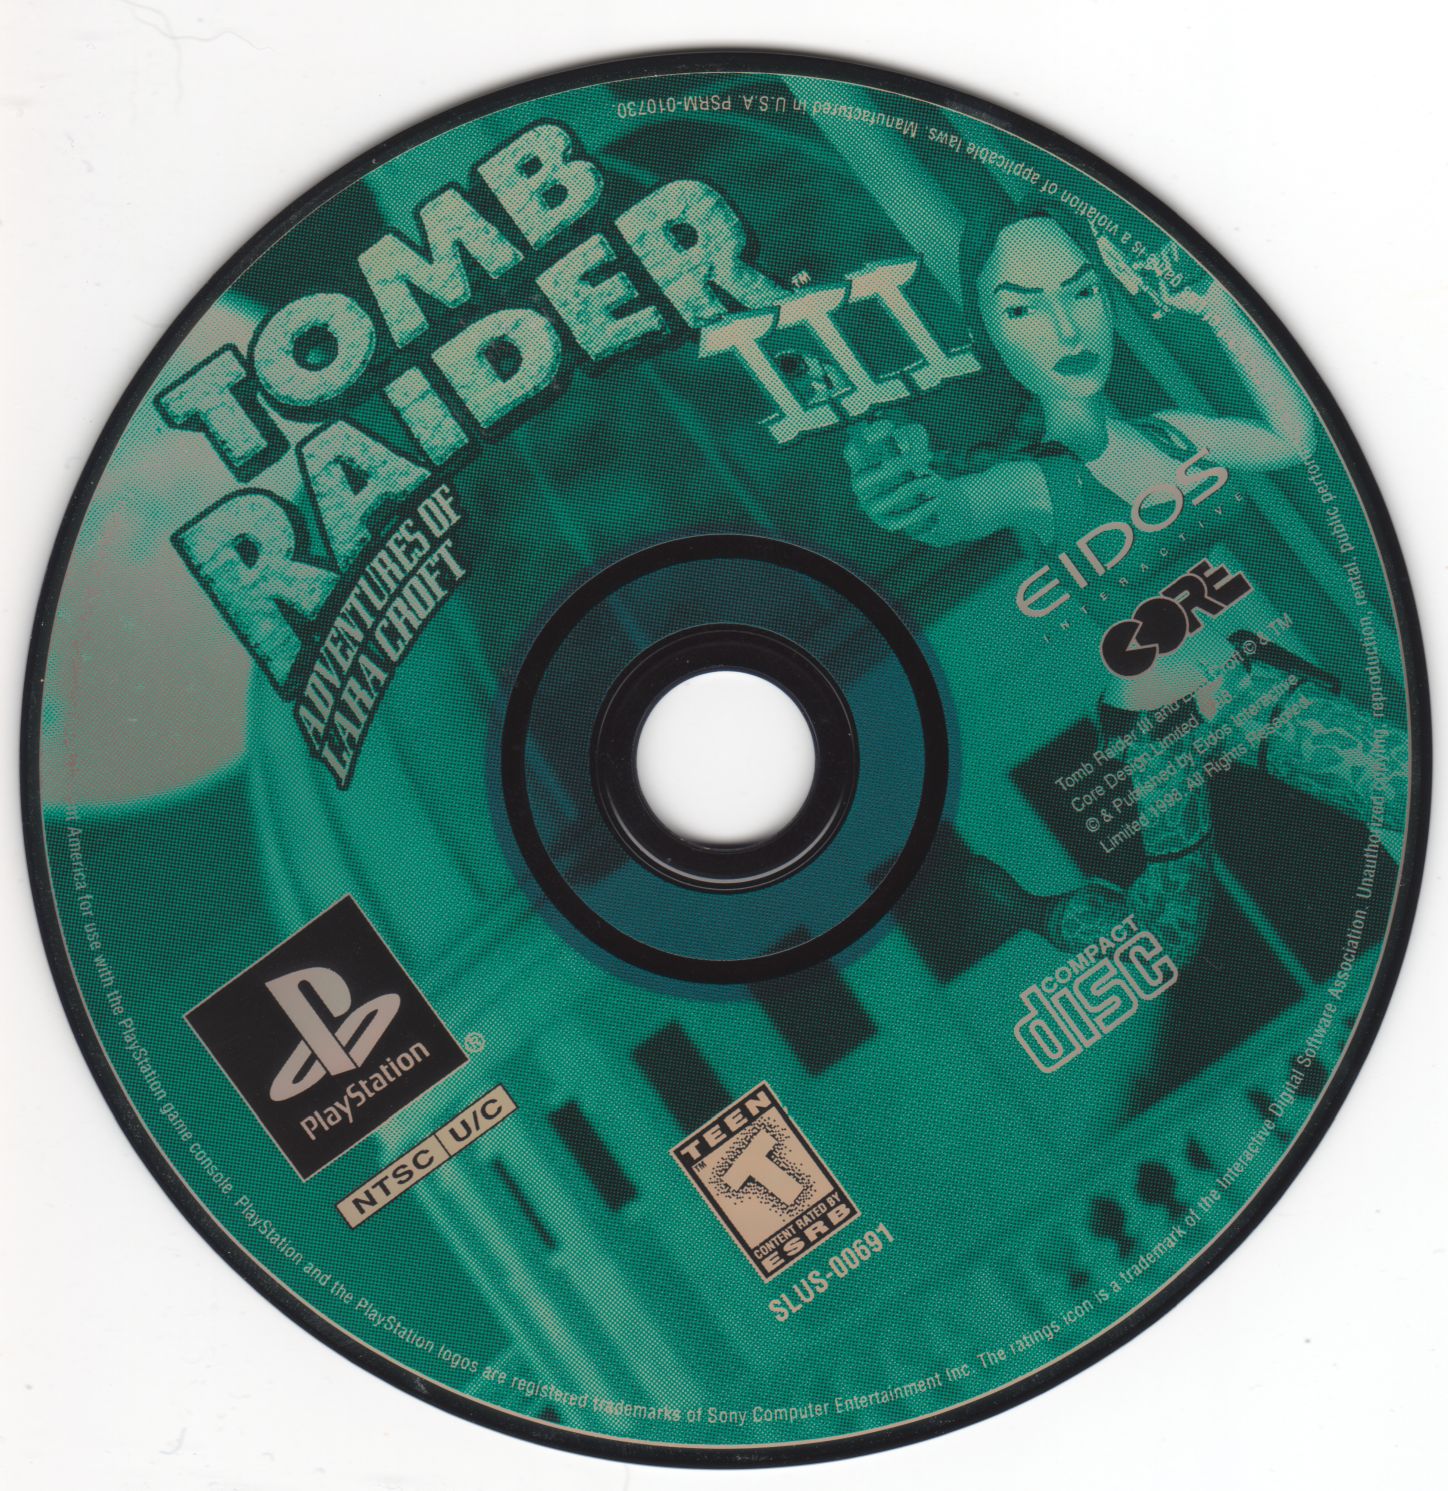 Tomb Raider III - Adventures of Lara Croft PSX cover